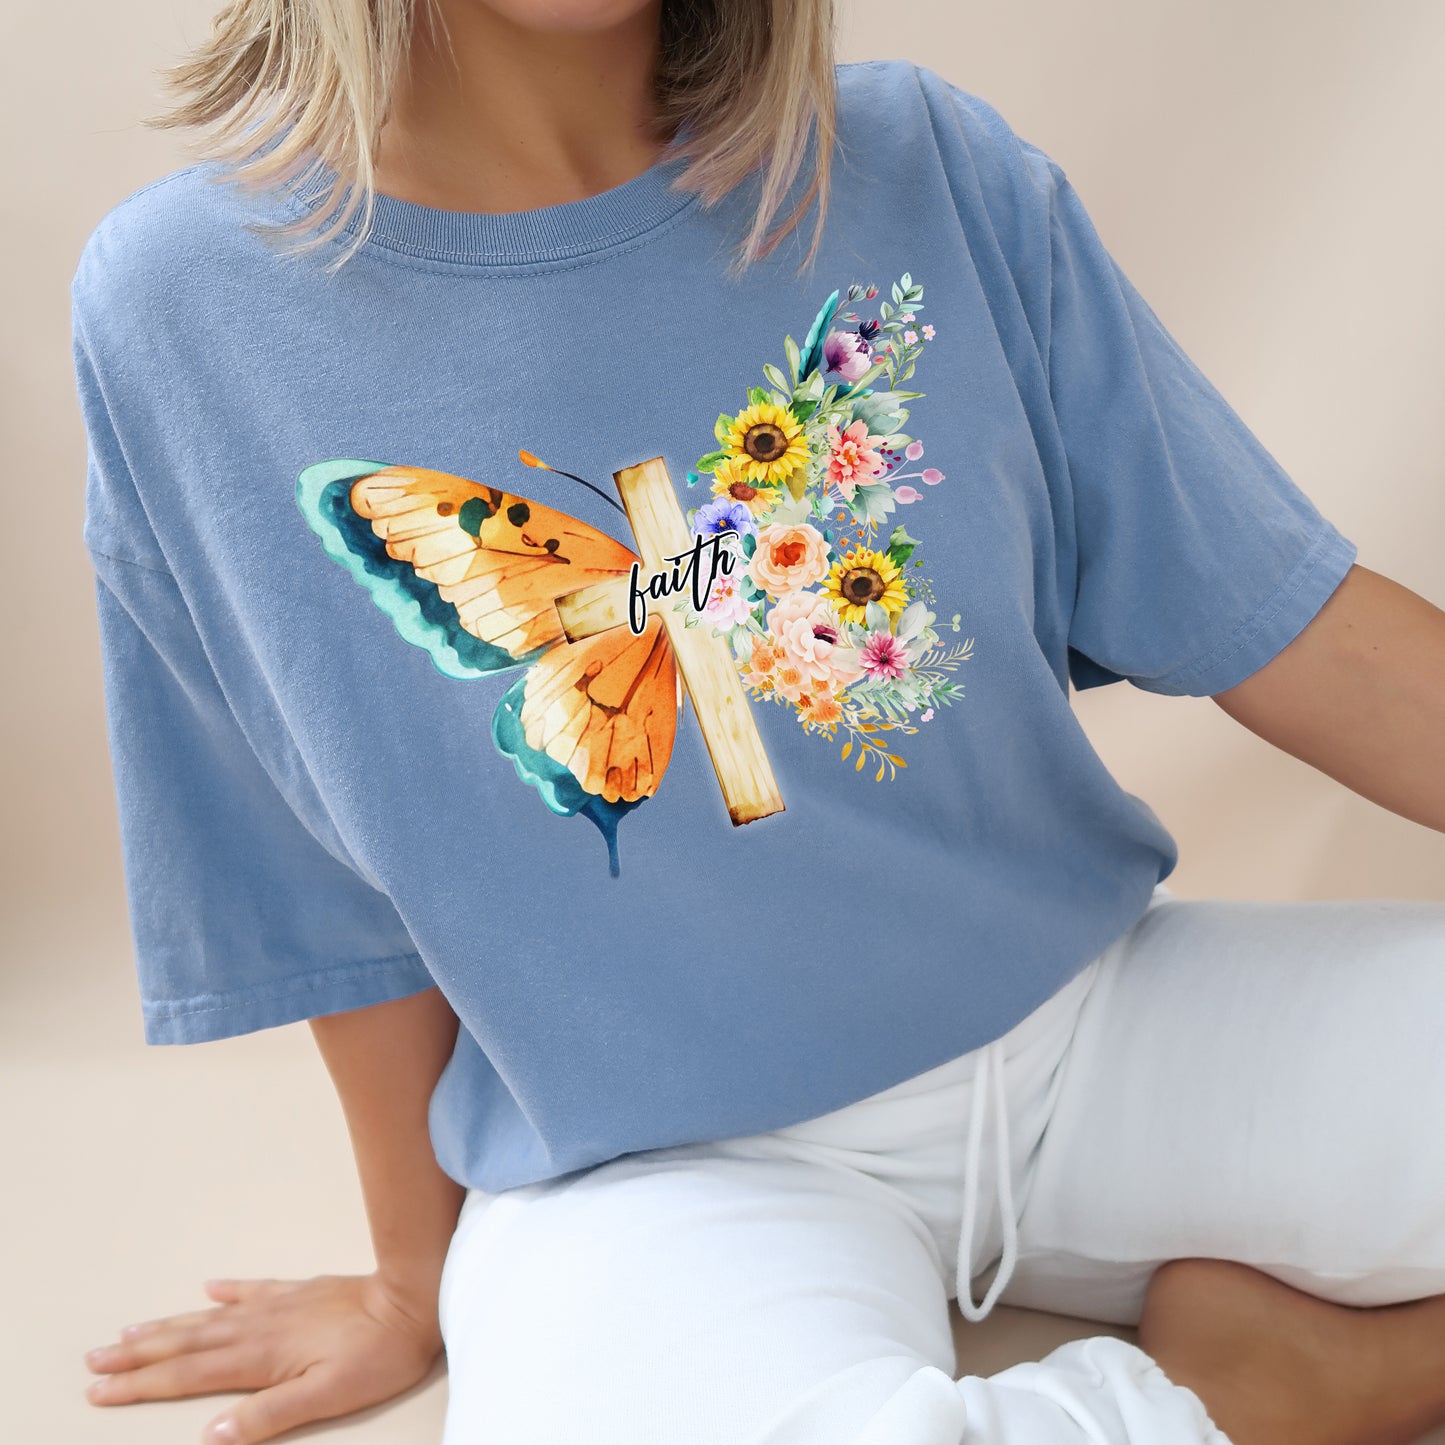 Faith Butterfly T-shirt